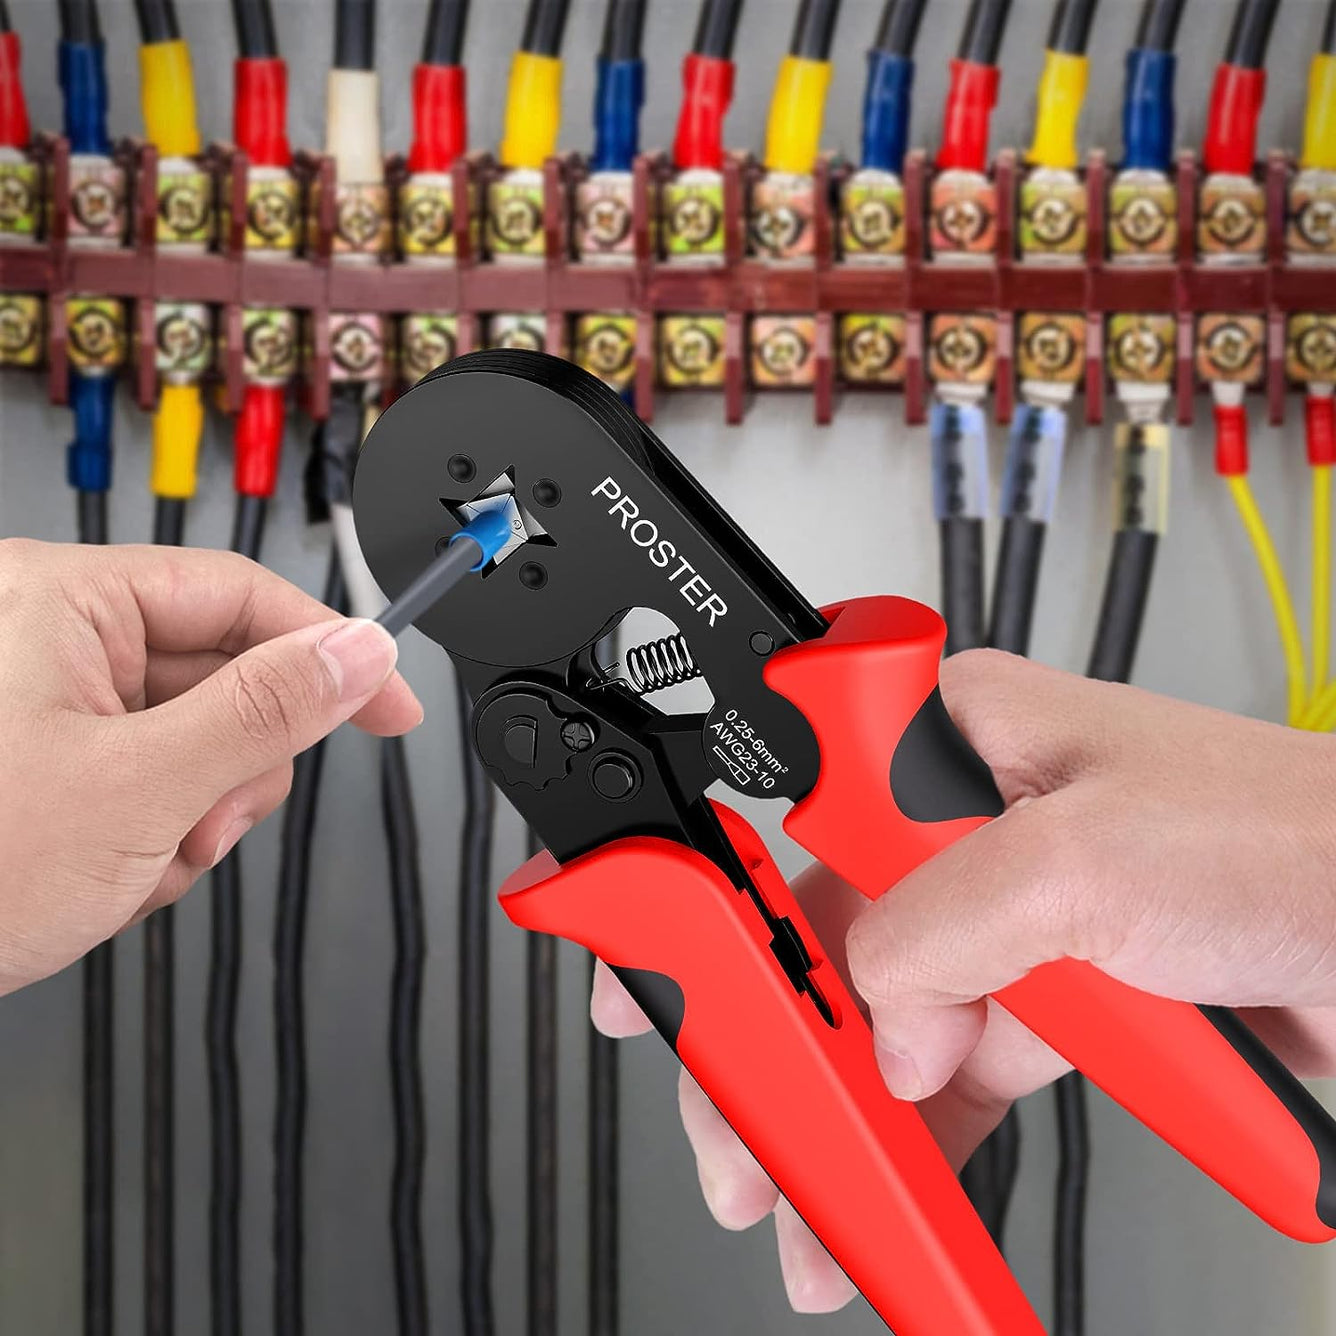 Proster Crimping Pliers 0.25-6 mm² Self-Adjusting Wire Ferrule Crimping Pliers Set